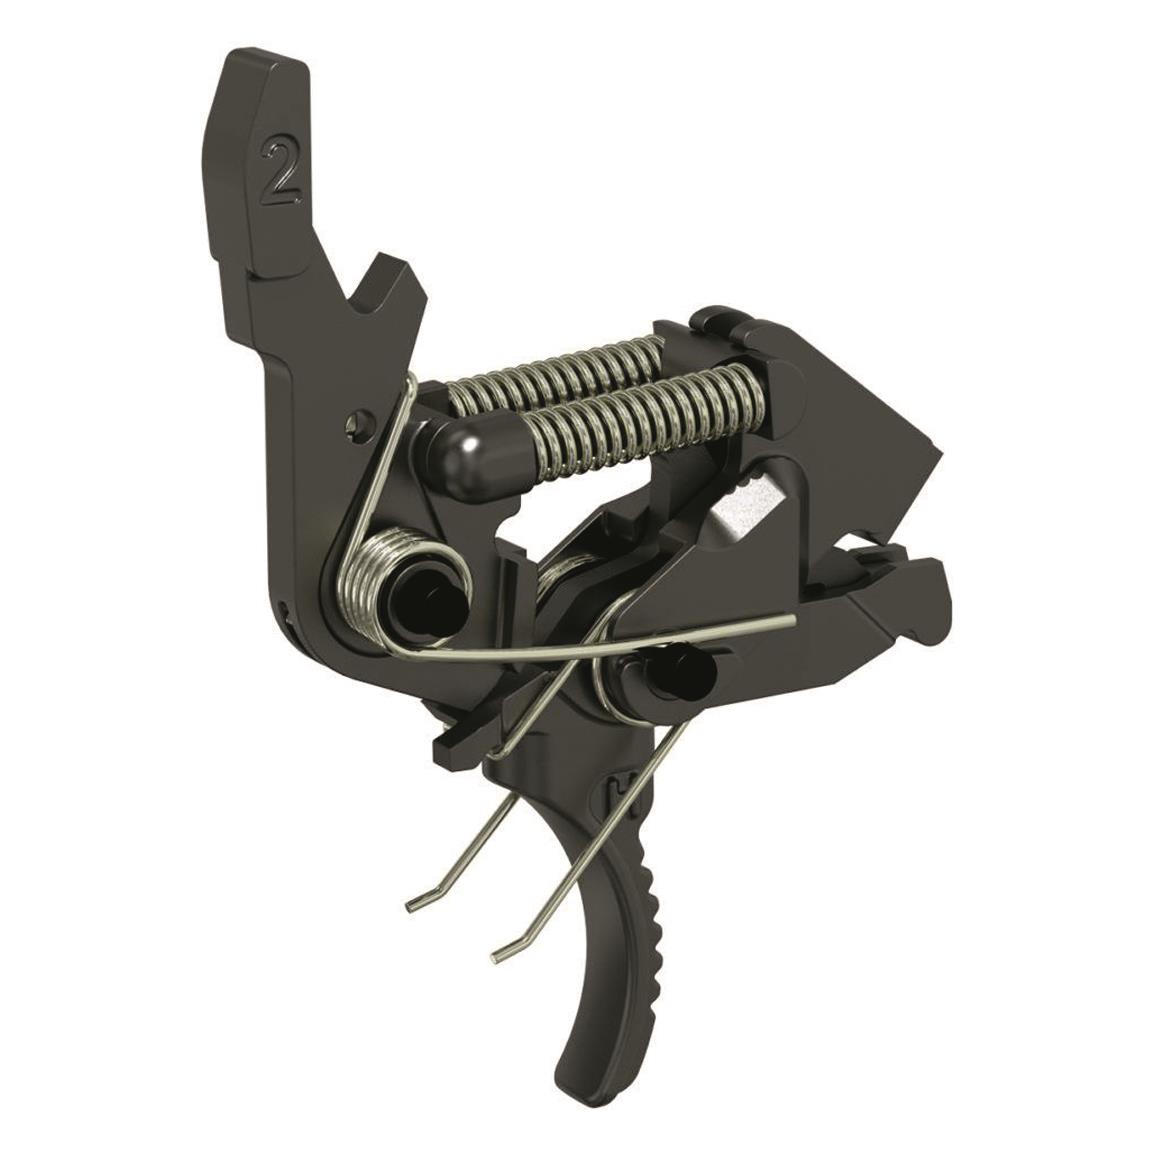 HIPERFIRE X2S MOD-2 AR-15/10 2-stage Trigger